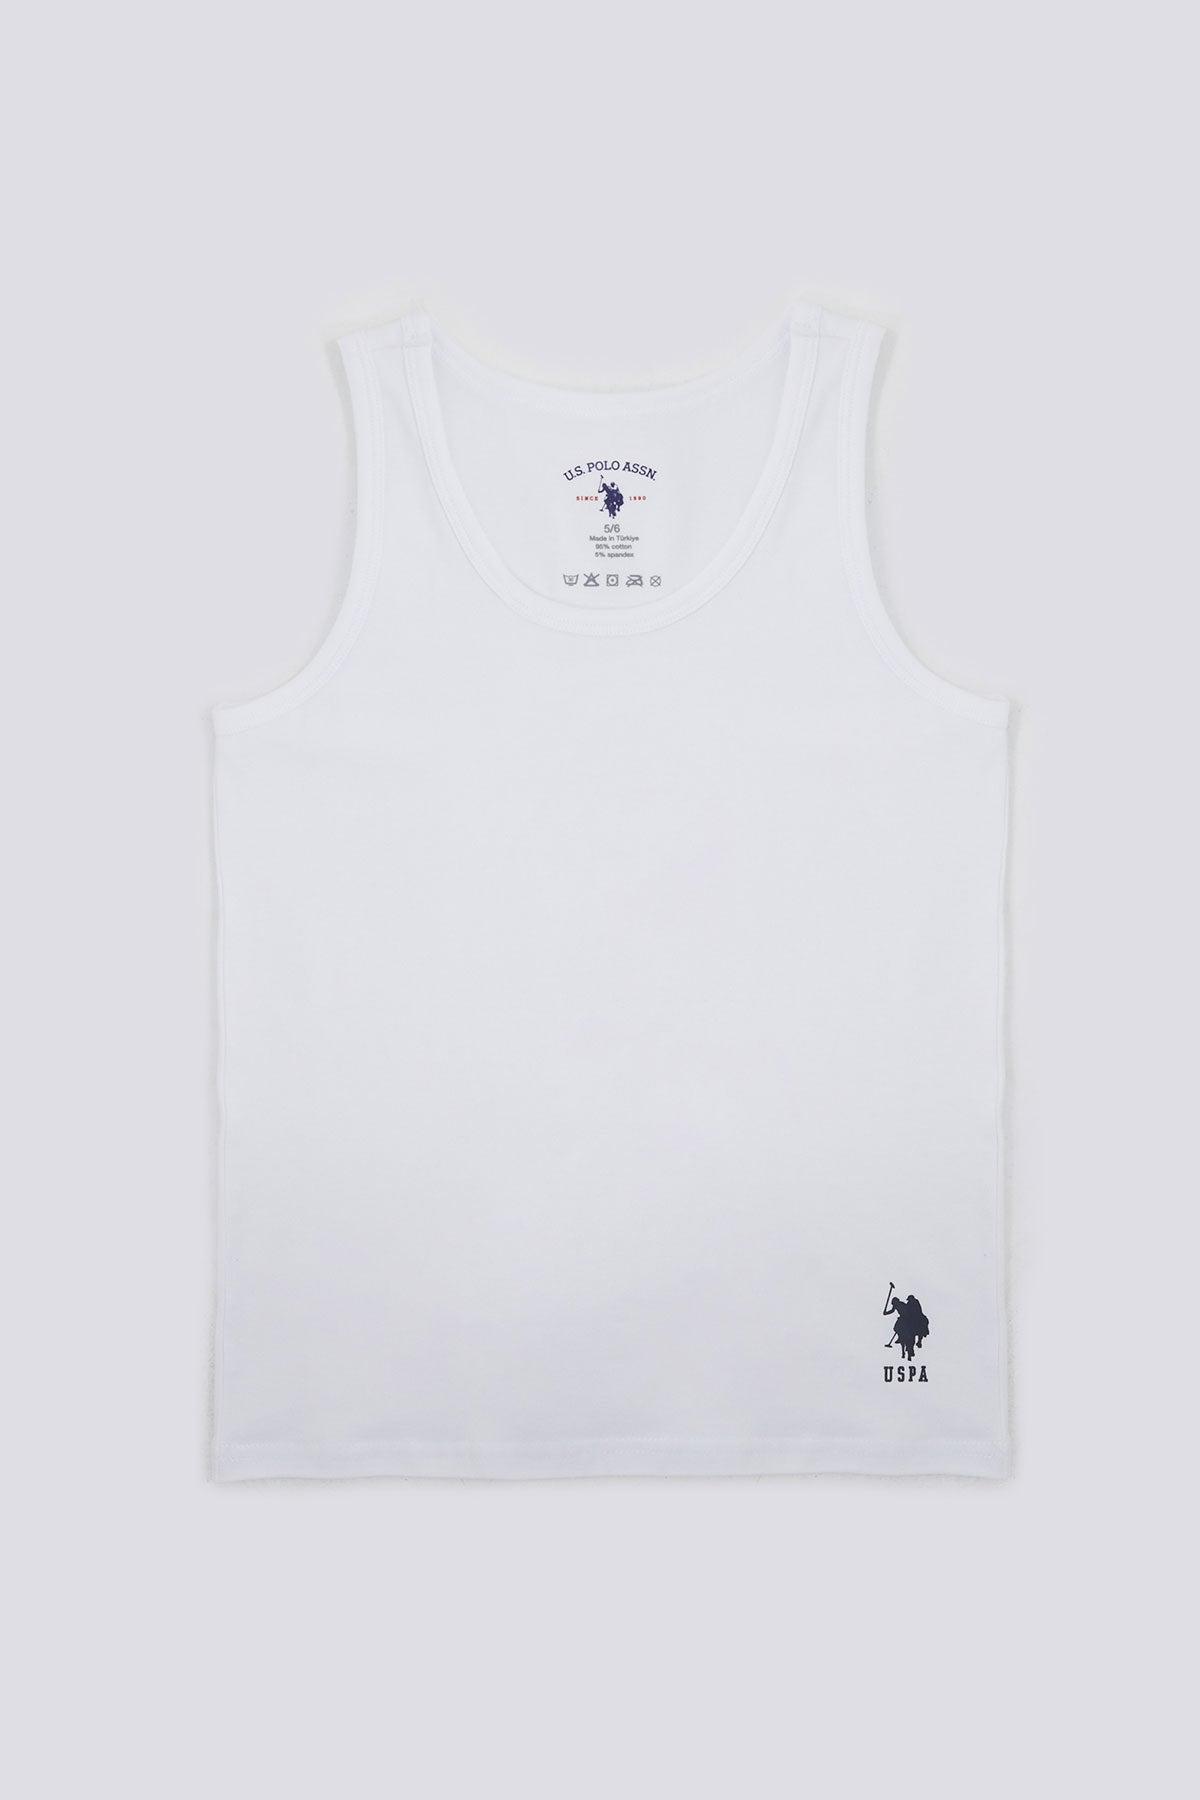 Selected image for U.S. Polo Assn. Set majica za dečake US1380, 2 komada, Teget i bela